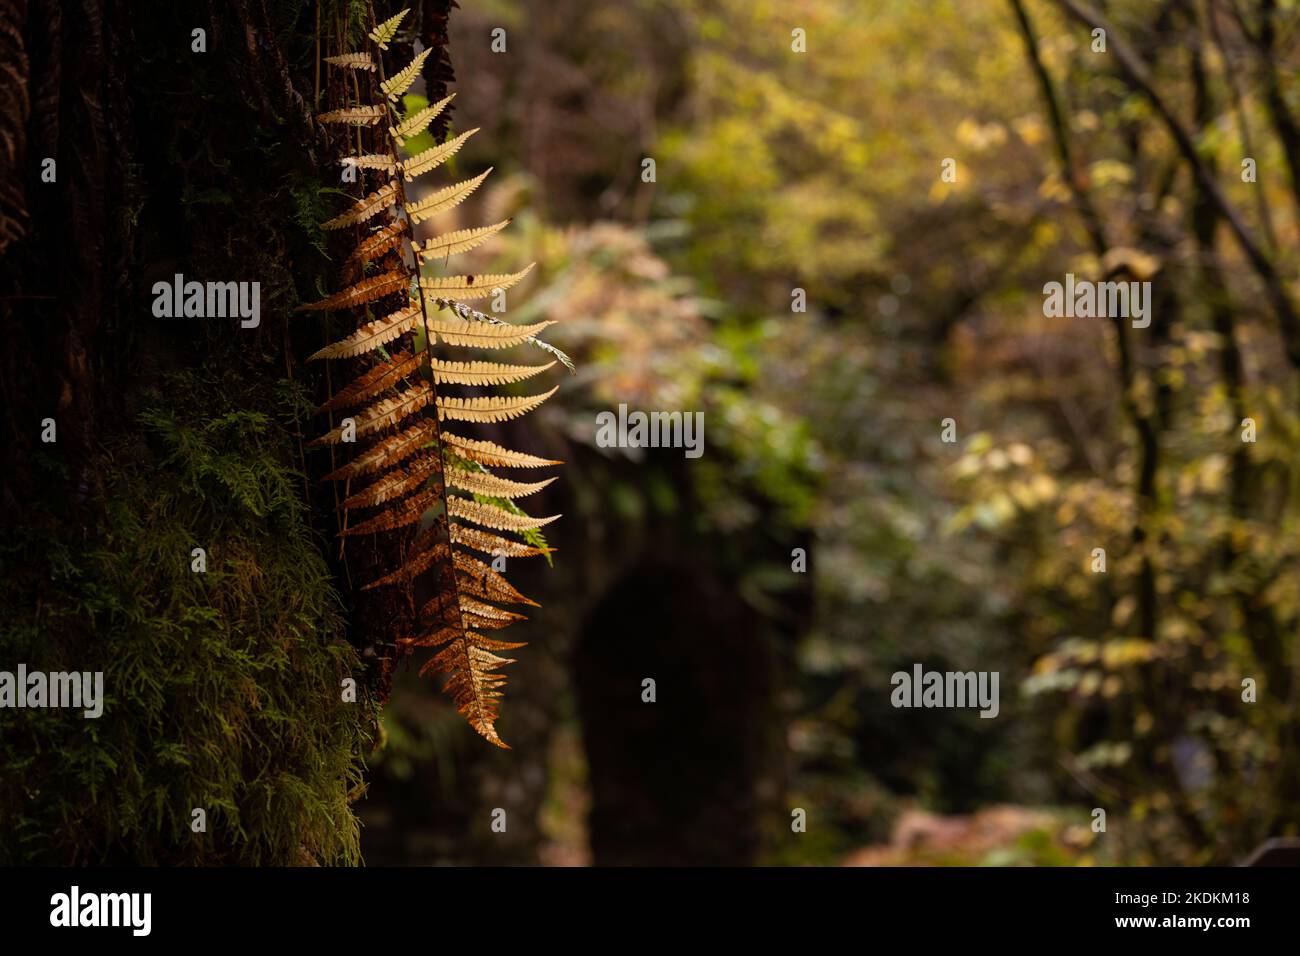 A fern turned gold by the slide into autumn, taken in Reelig Glen Stock Photo